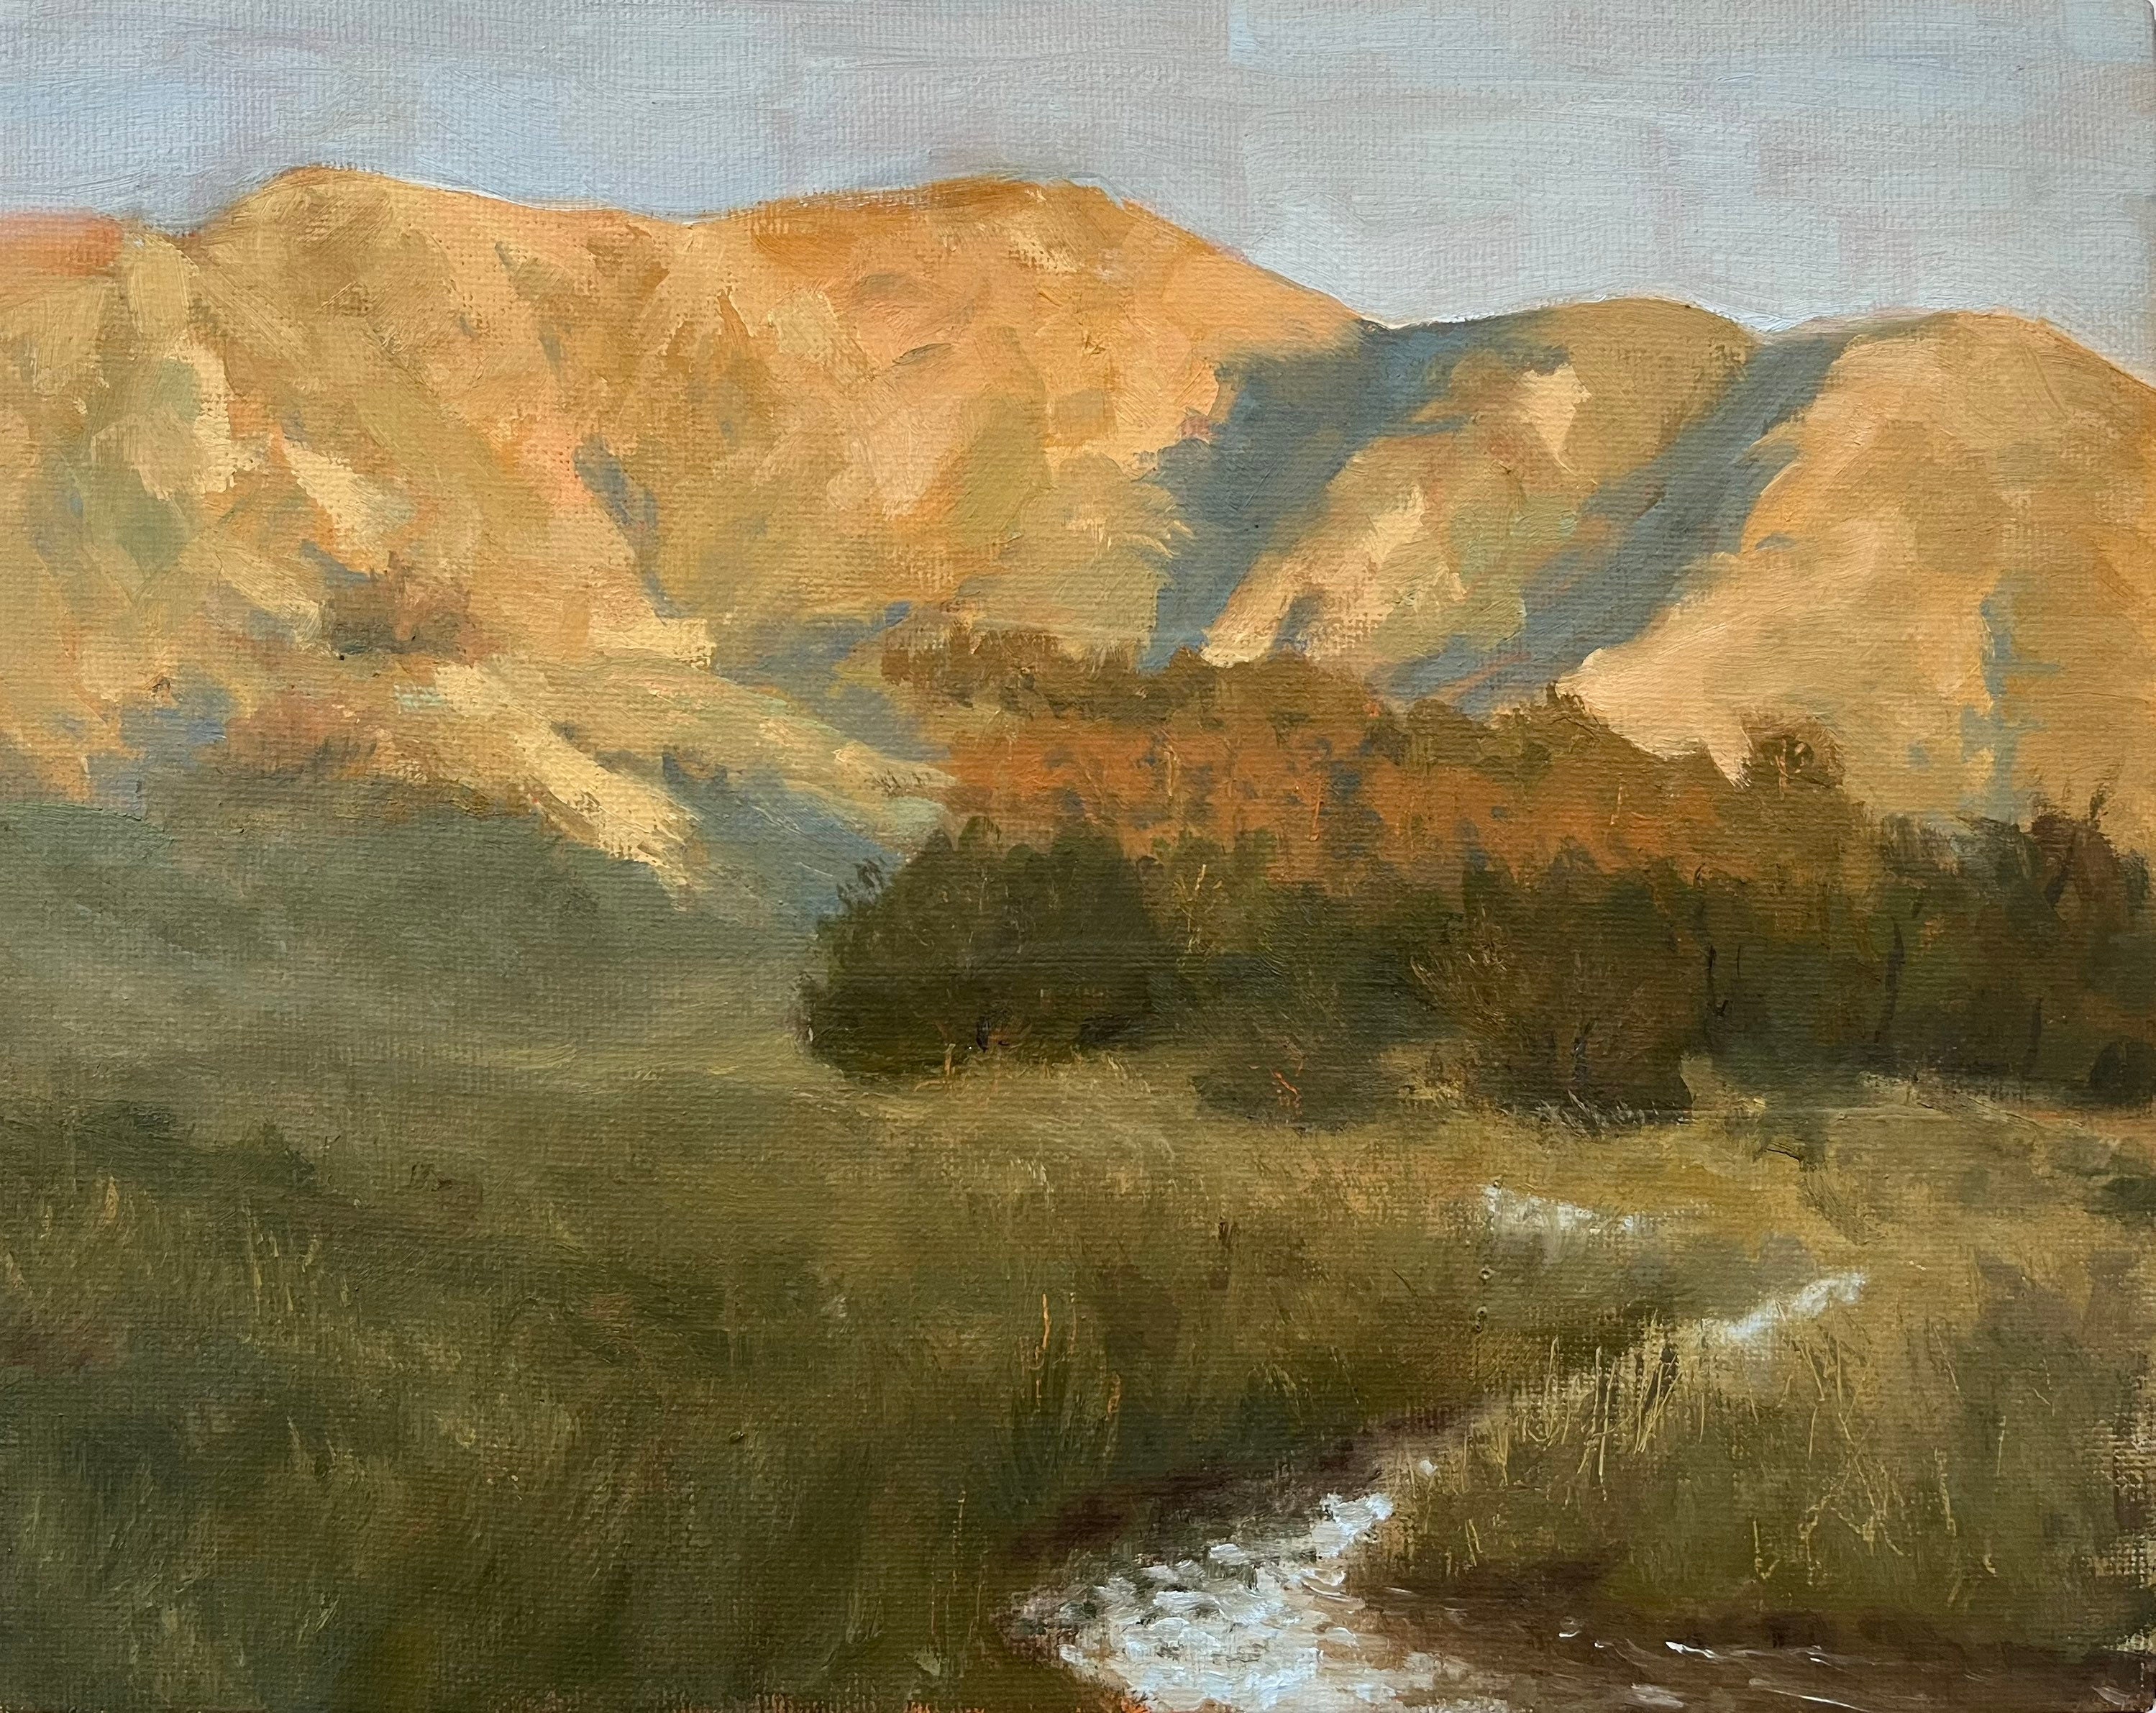 Moria Khazad Dum landscape 1 - Handmade oil painting on canvas on demand